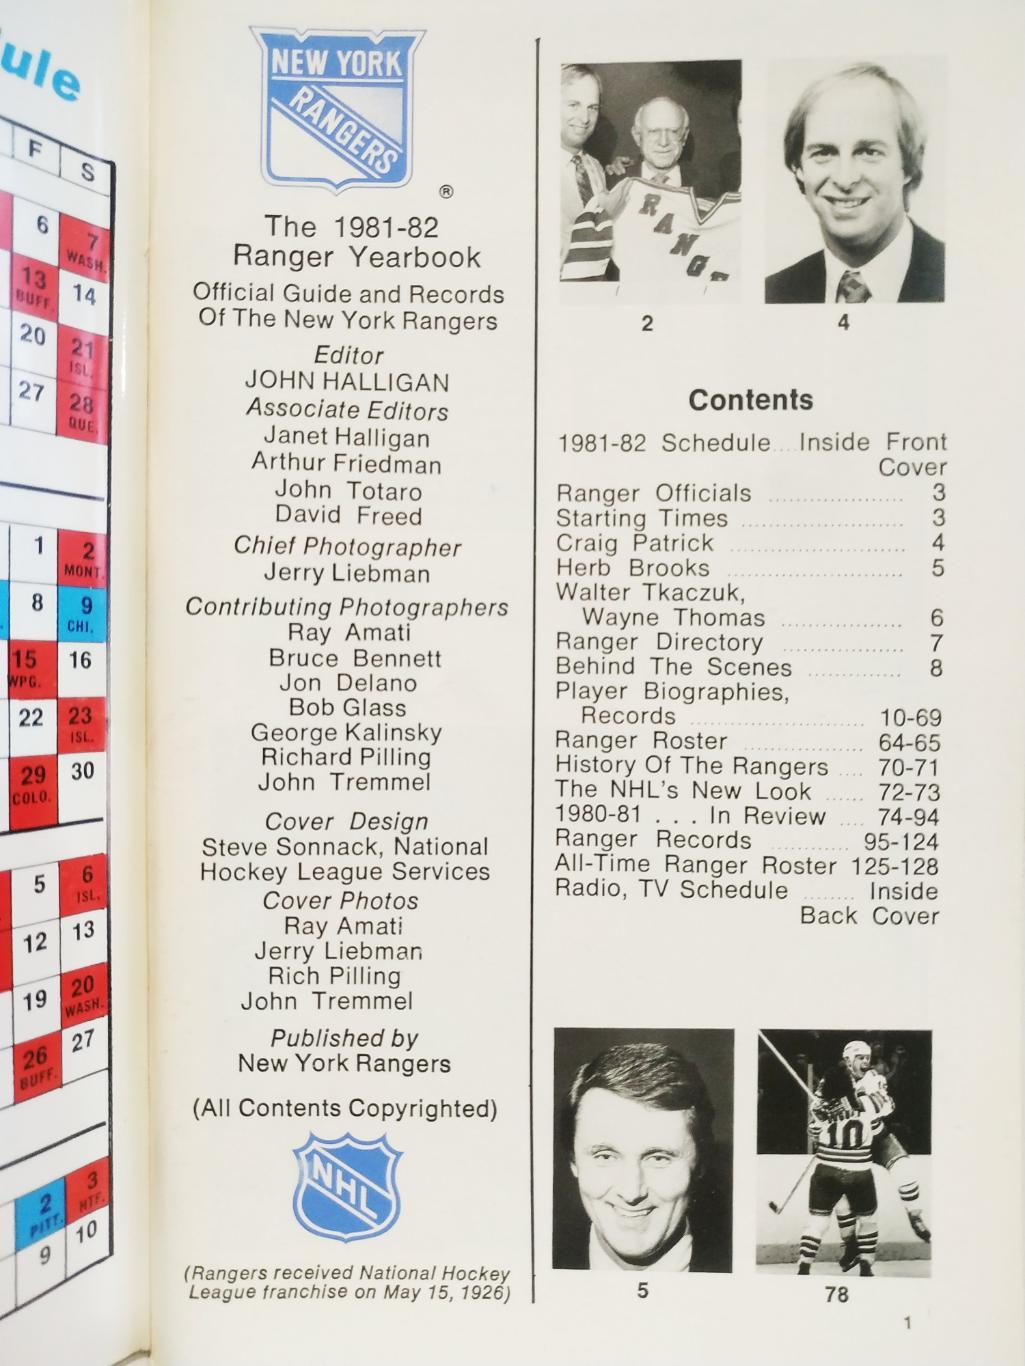 ХОККЕЙ СПРАВОЧНИК ЕЖЕГОДНИК НХЛ РЕЙНДЖЕРС 1981-82 NEW YORK RANGERS YEARBOOK 1